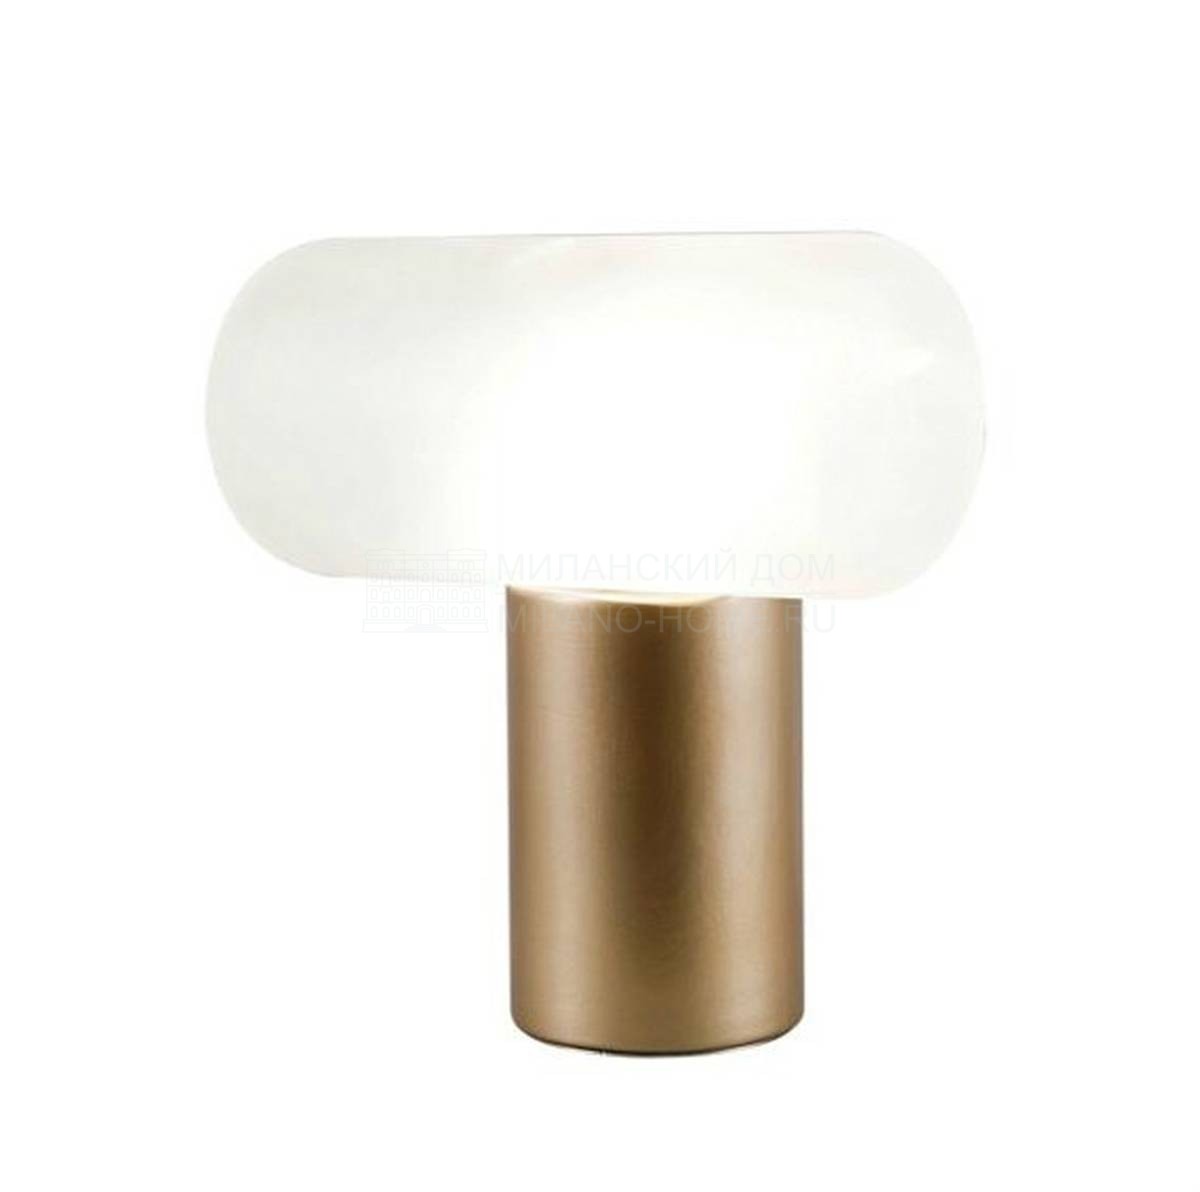 Настольная лампа Amor table lamp из Франции фабрики ROCHE BOBOIS